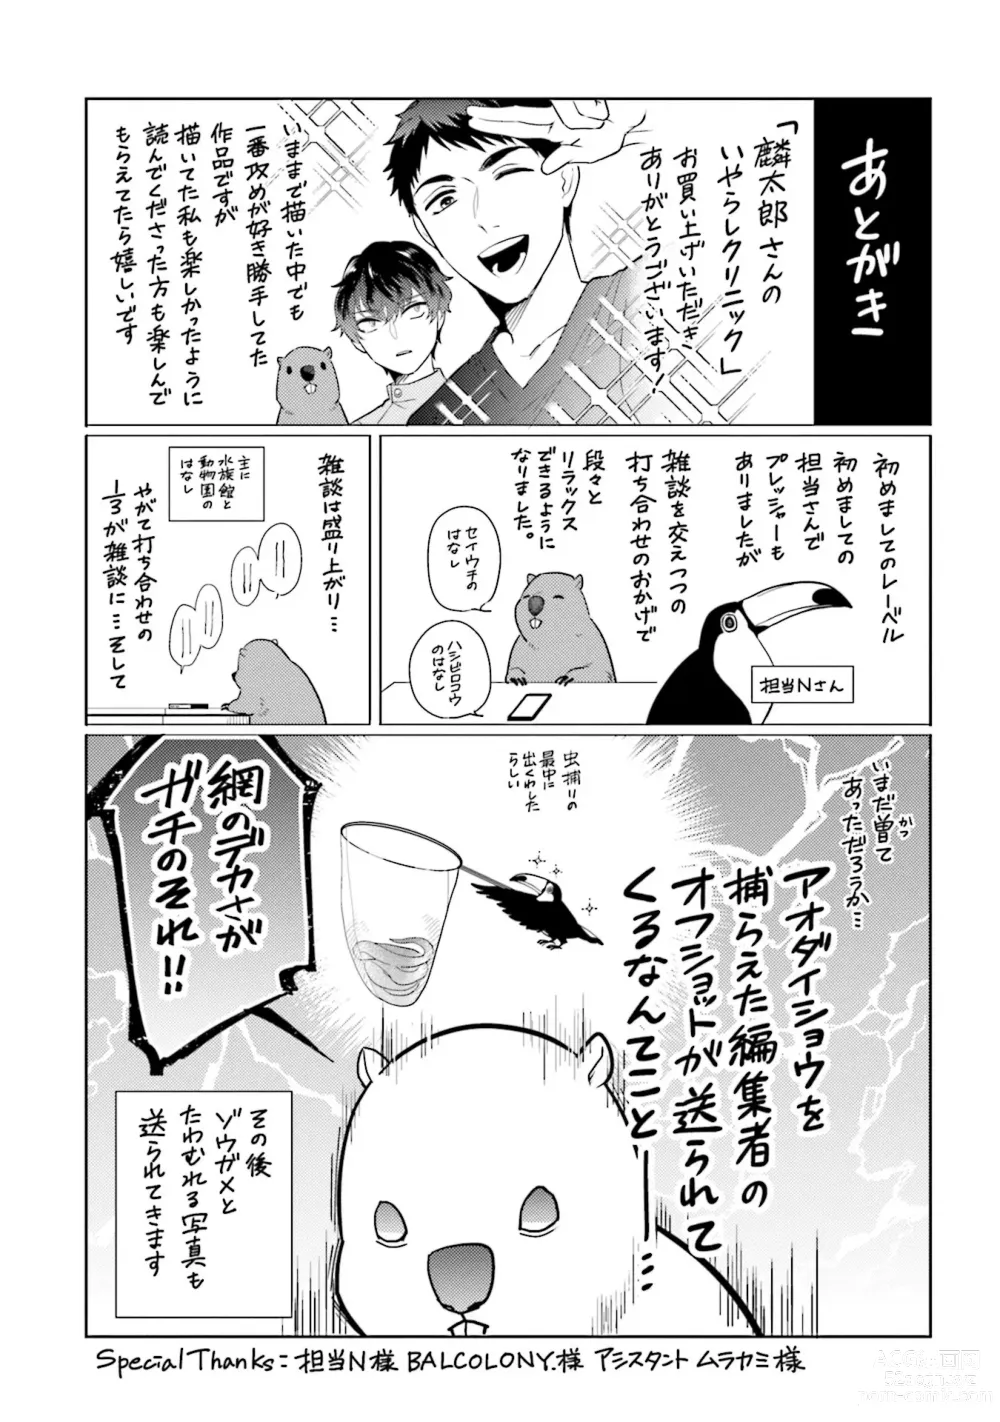 Page 177 of manga Rintarou-san no Iyarashi Clinic